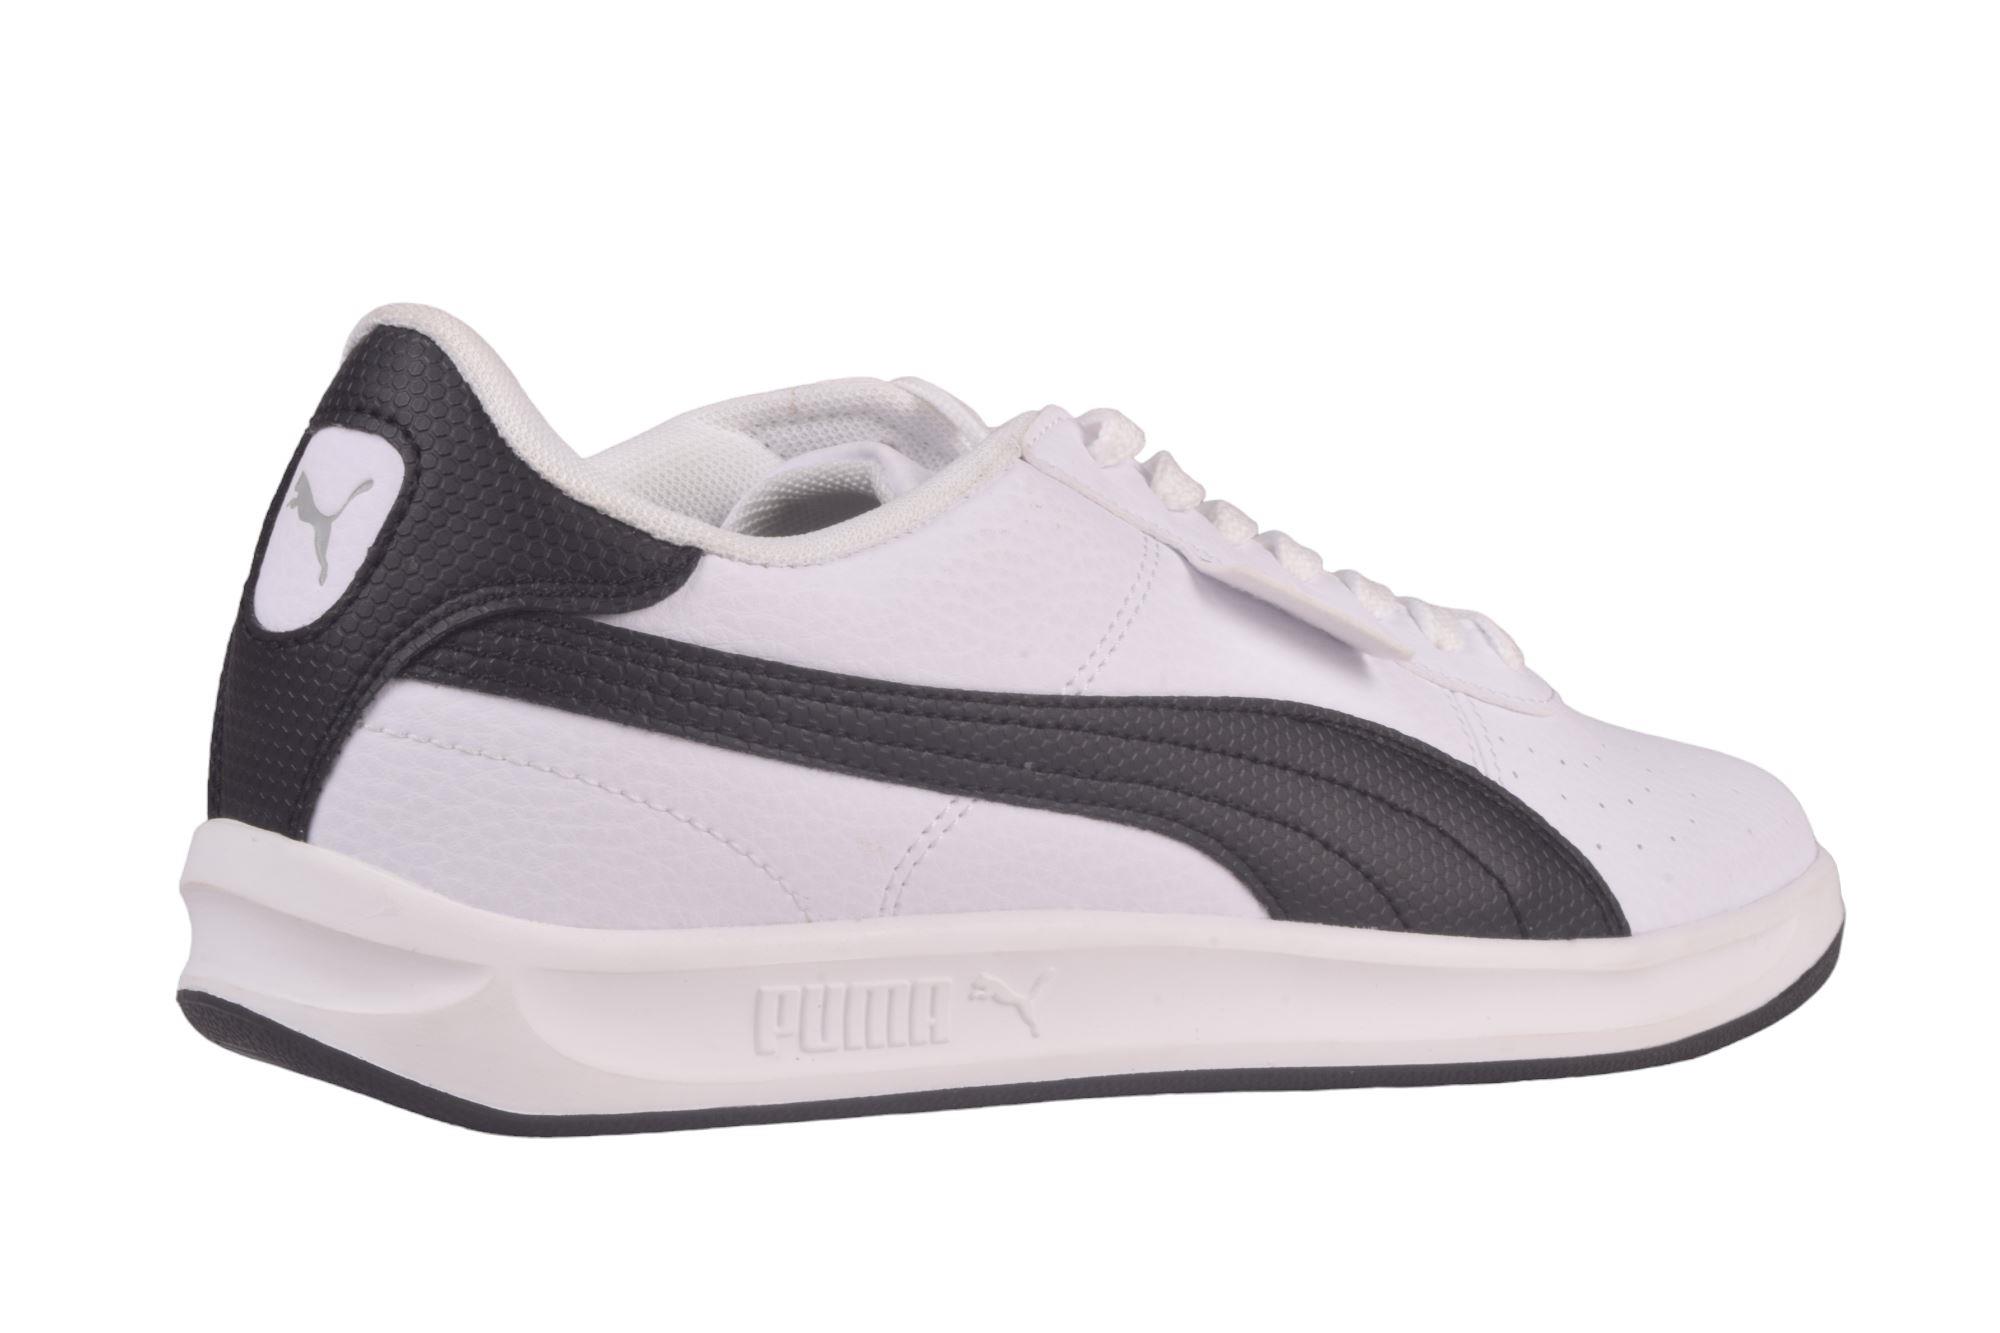 Puma Men White Sneakers - Buy Puma Men White Sneakers online in India